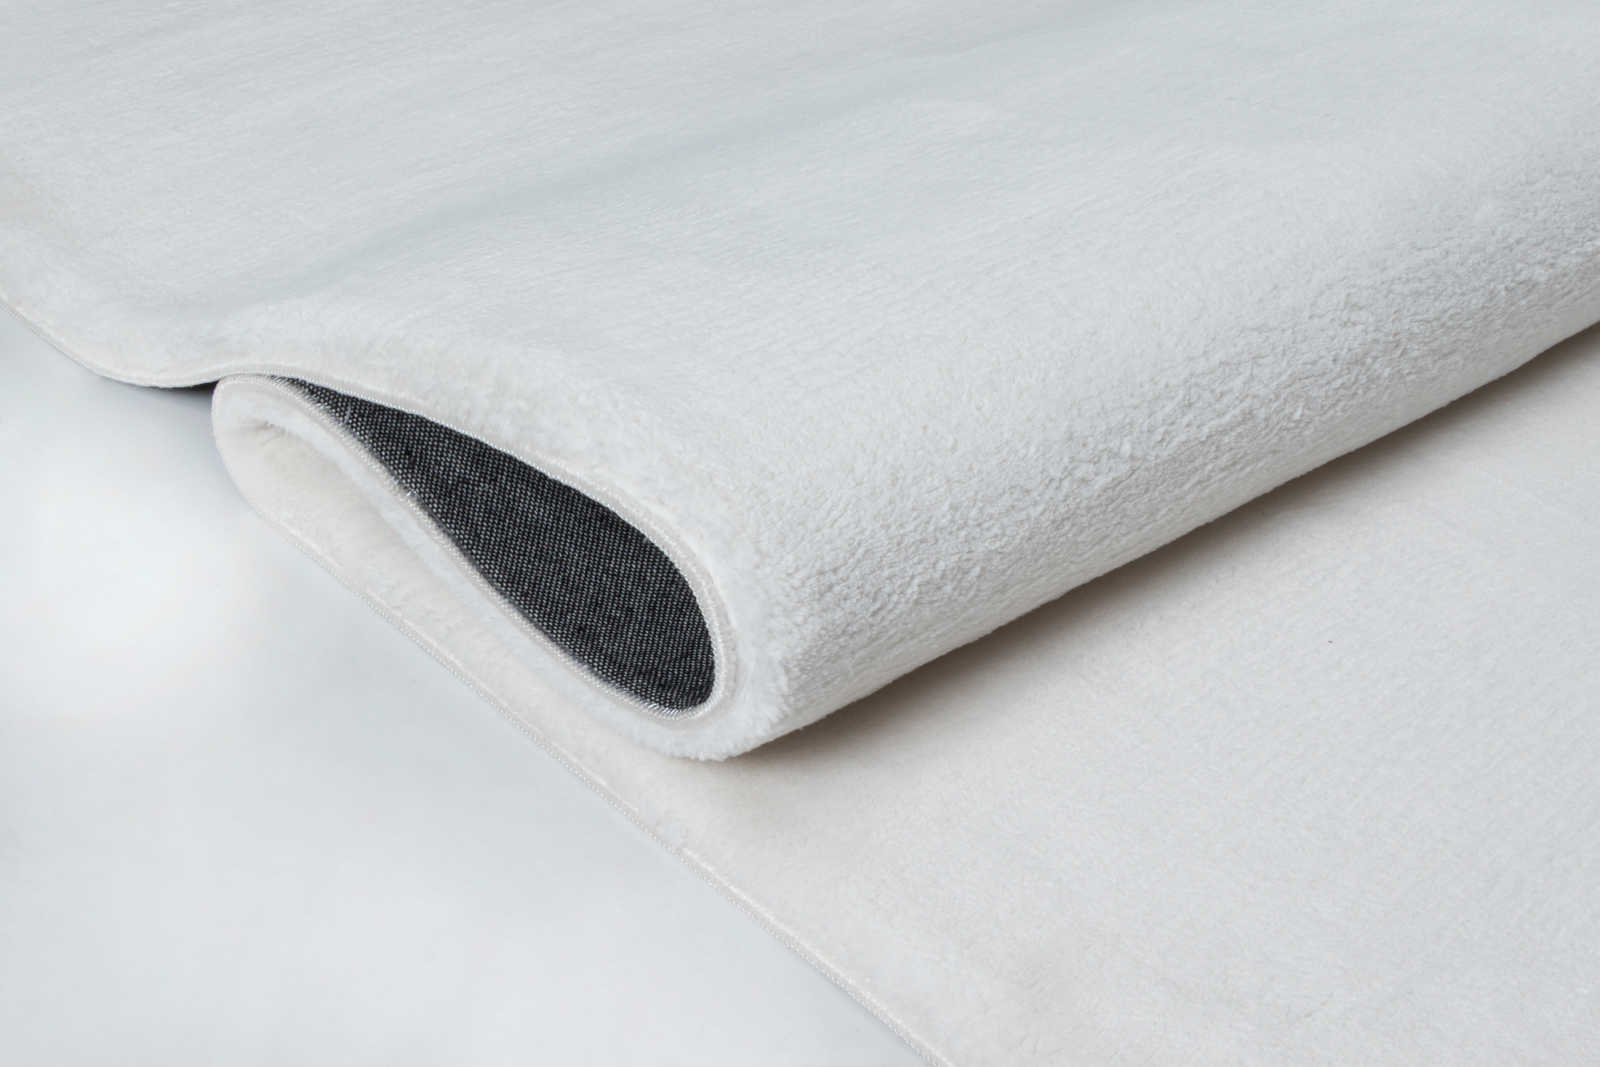             Fluffy high pile carpet in pleasant cream - 200 x 140 cm
        